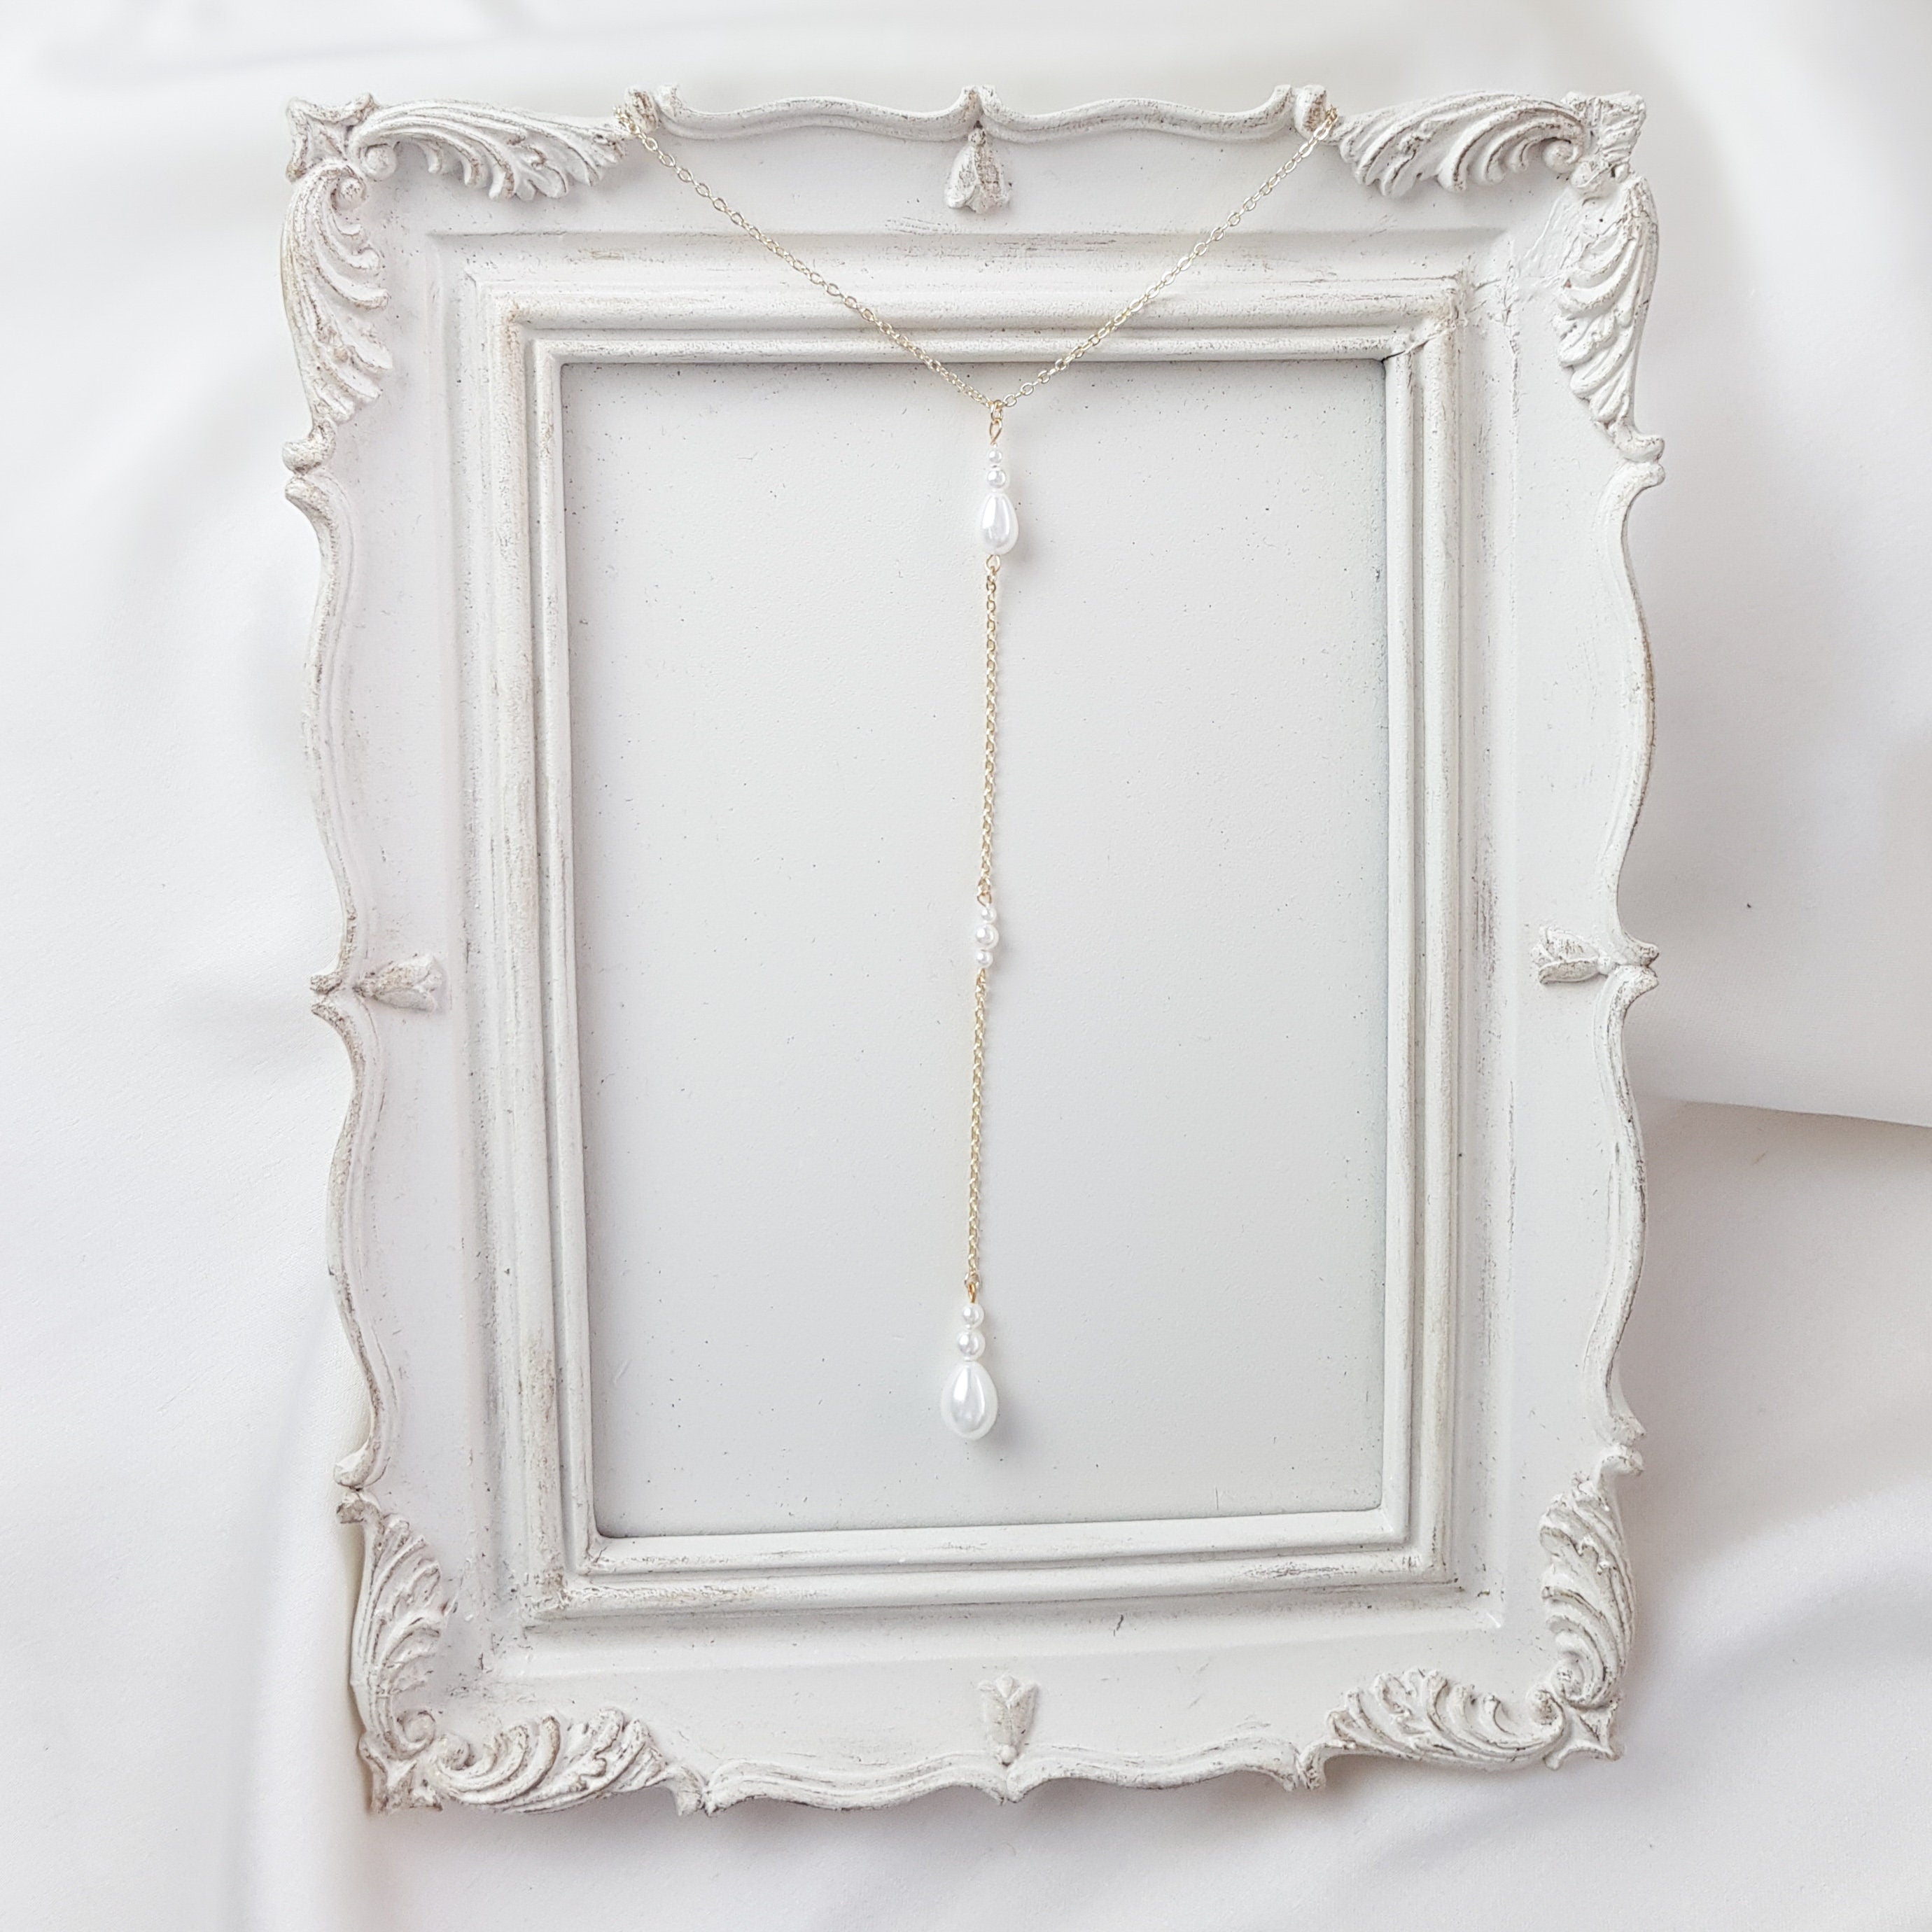 Vintage style pearl drop necklace, Gold pearl Elegant wedding necklace, Dainty lariat bridal necklace, Y necklace, Jewellery for brides